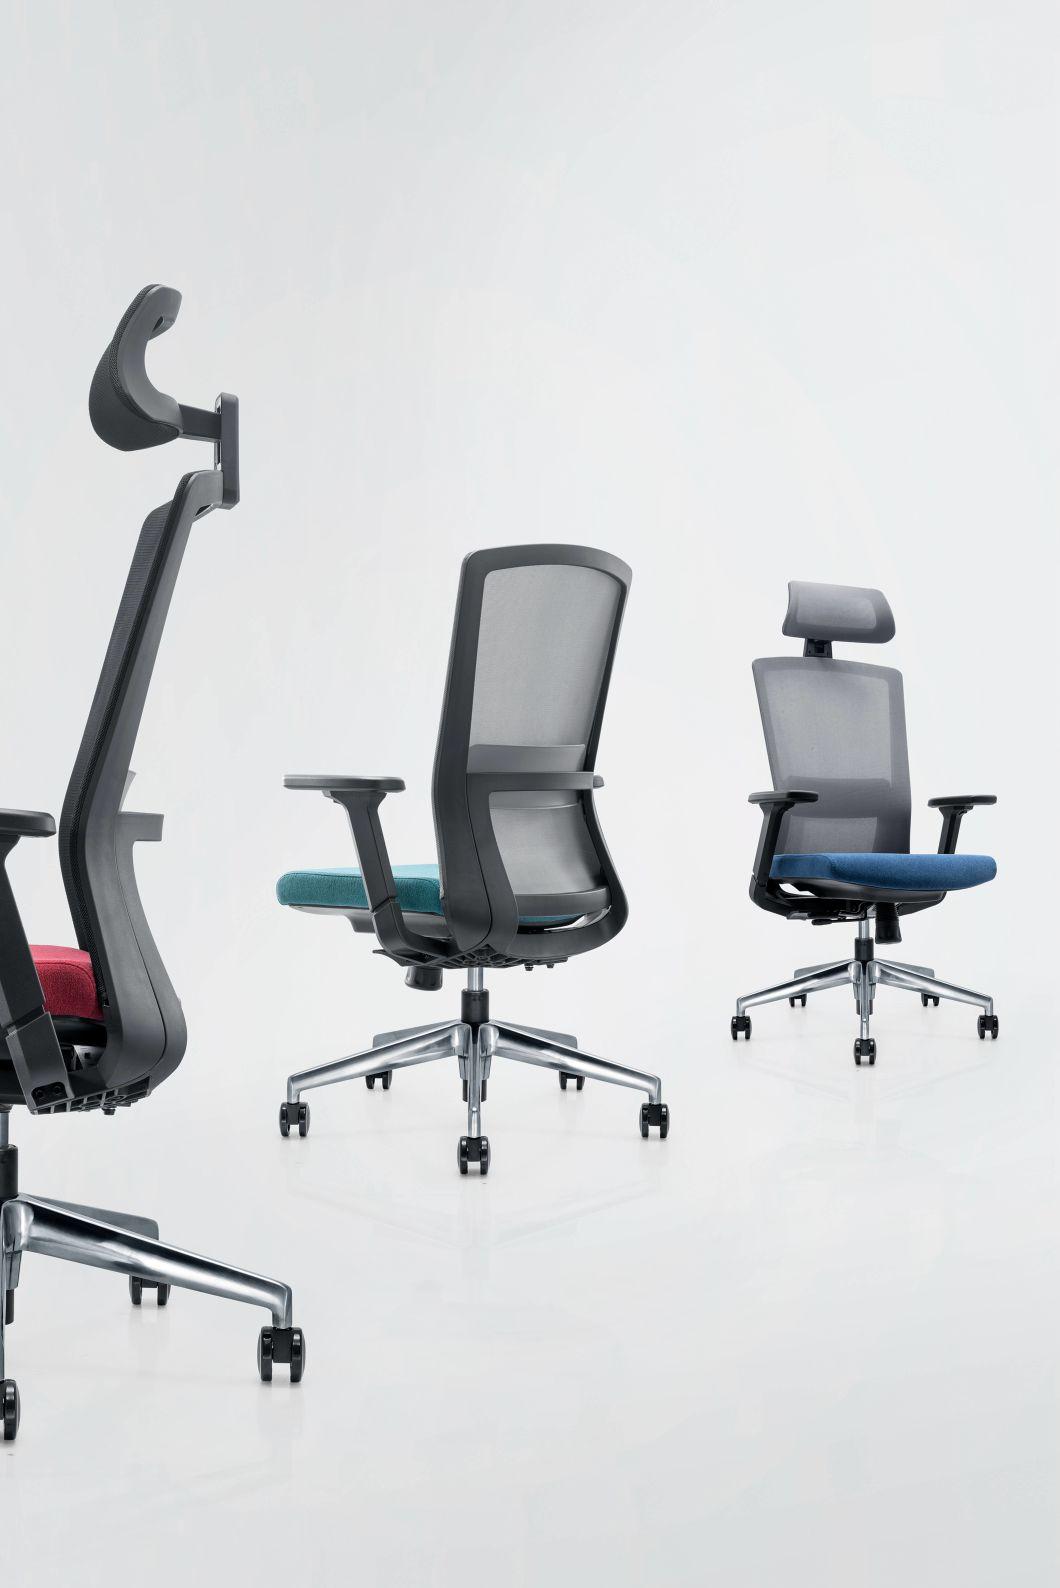 Unfolded Foshan Swivel Boss Furniture Fabric Home Computer Metal Office Chair Hot